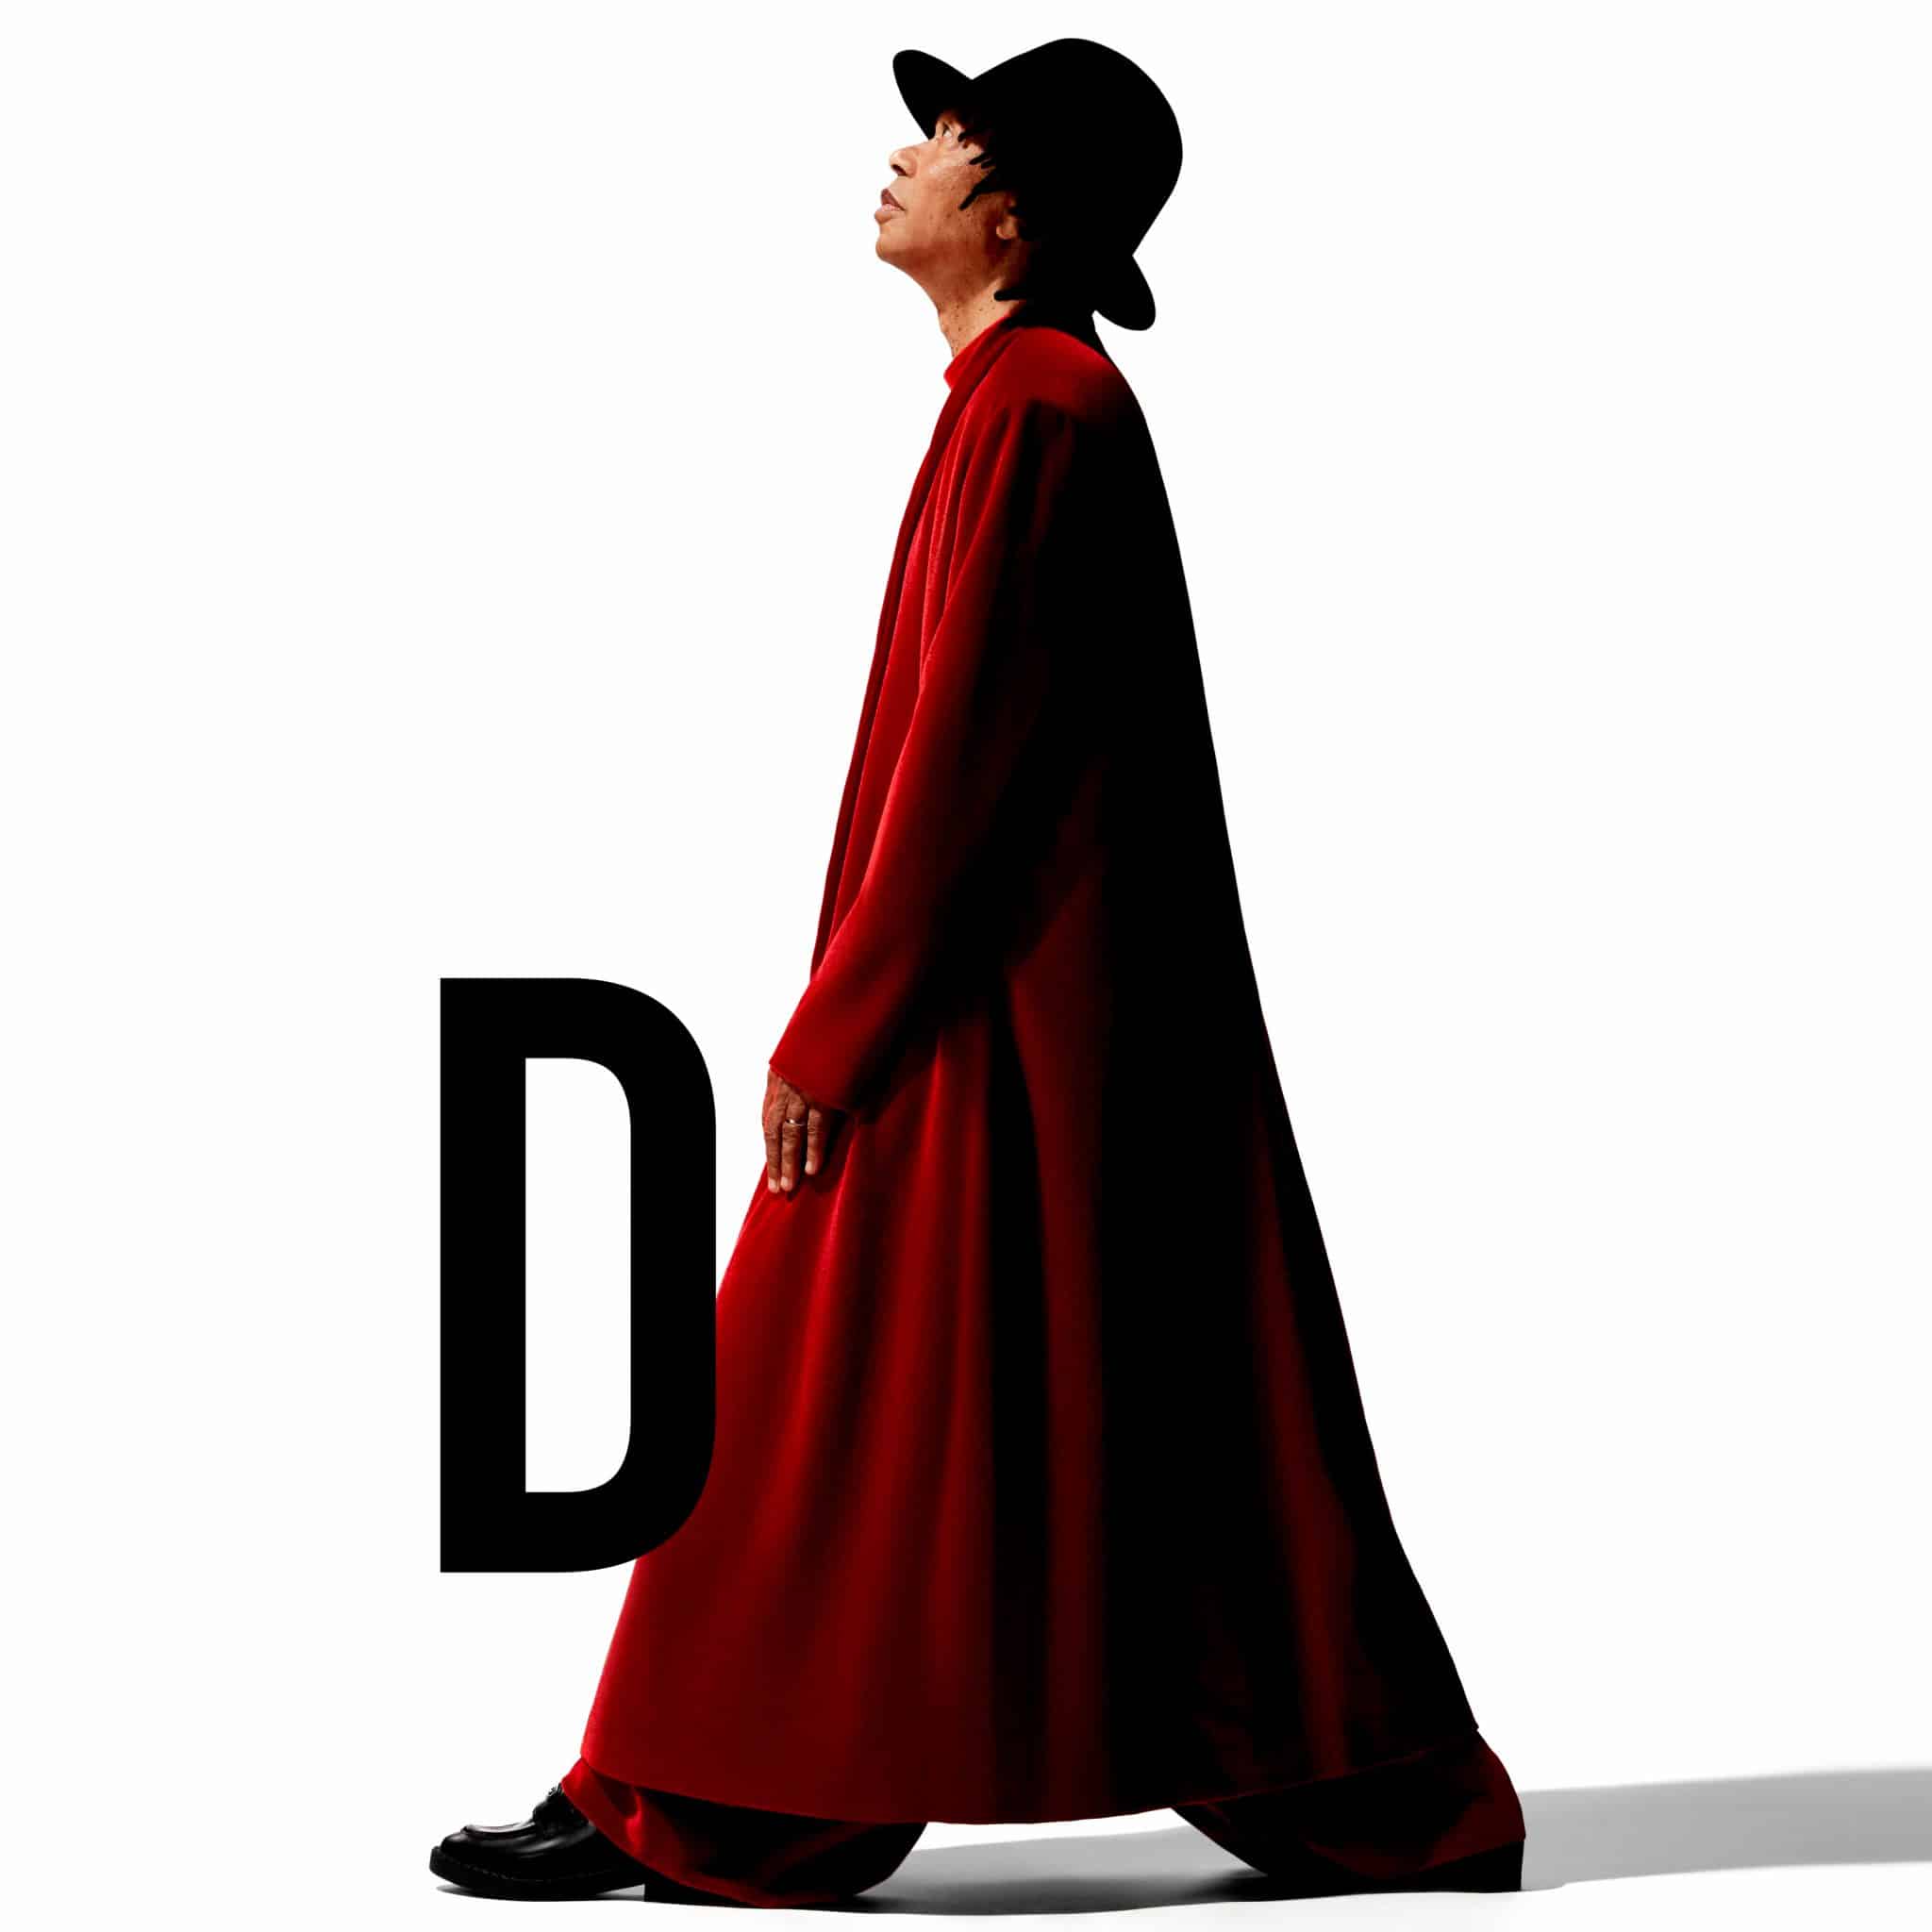 revistaprosaversoearte.com - 'D' 25º álbum de Djavan